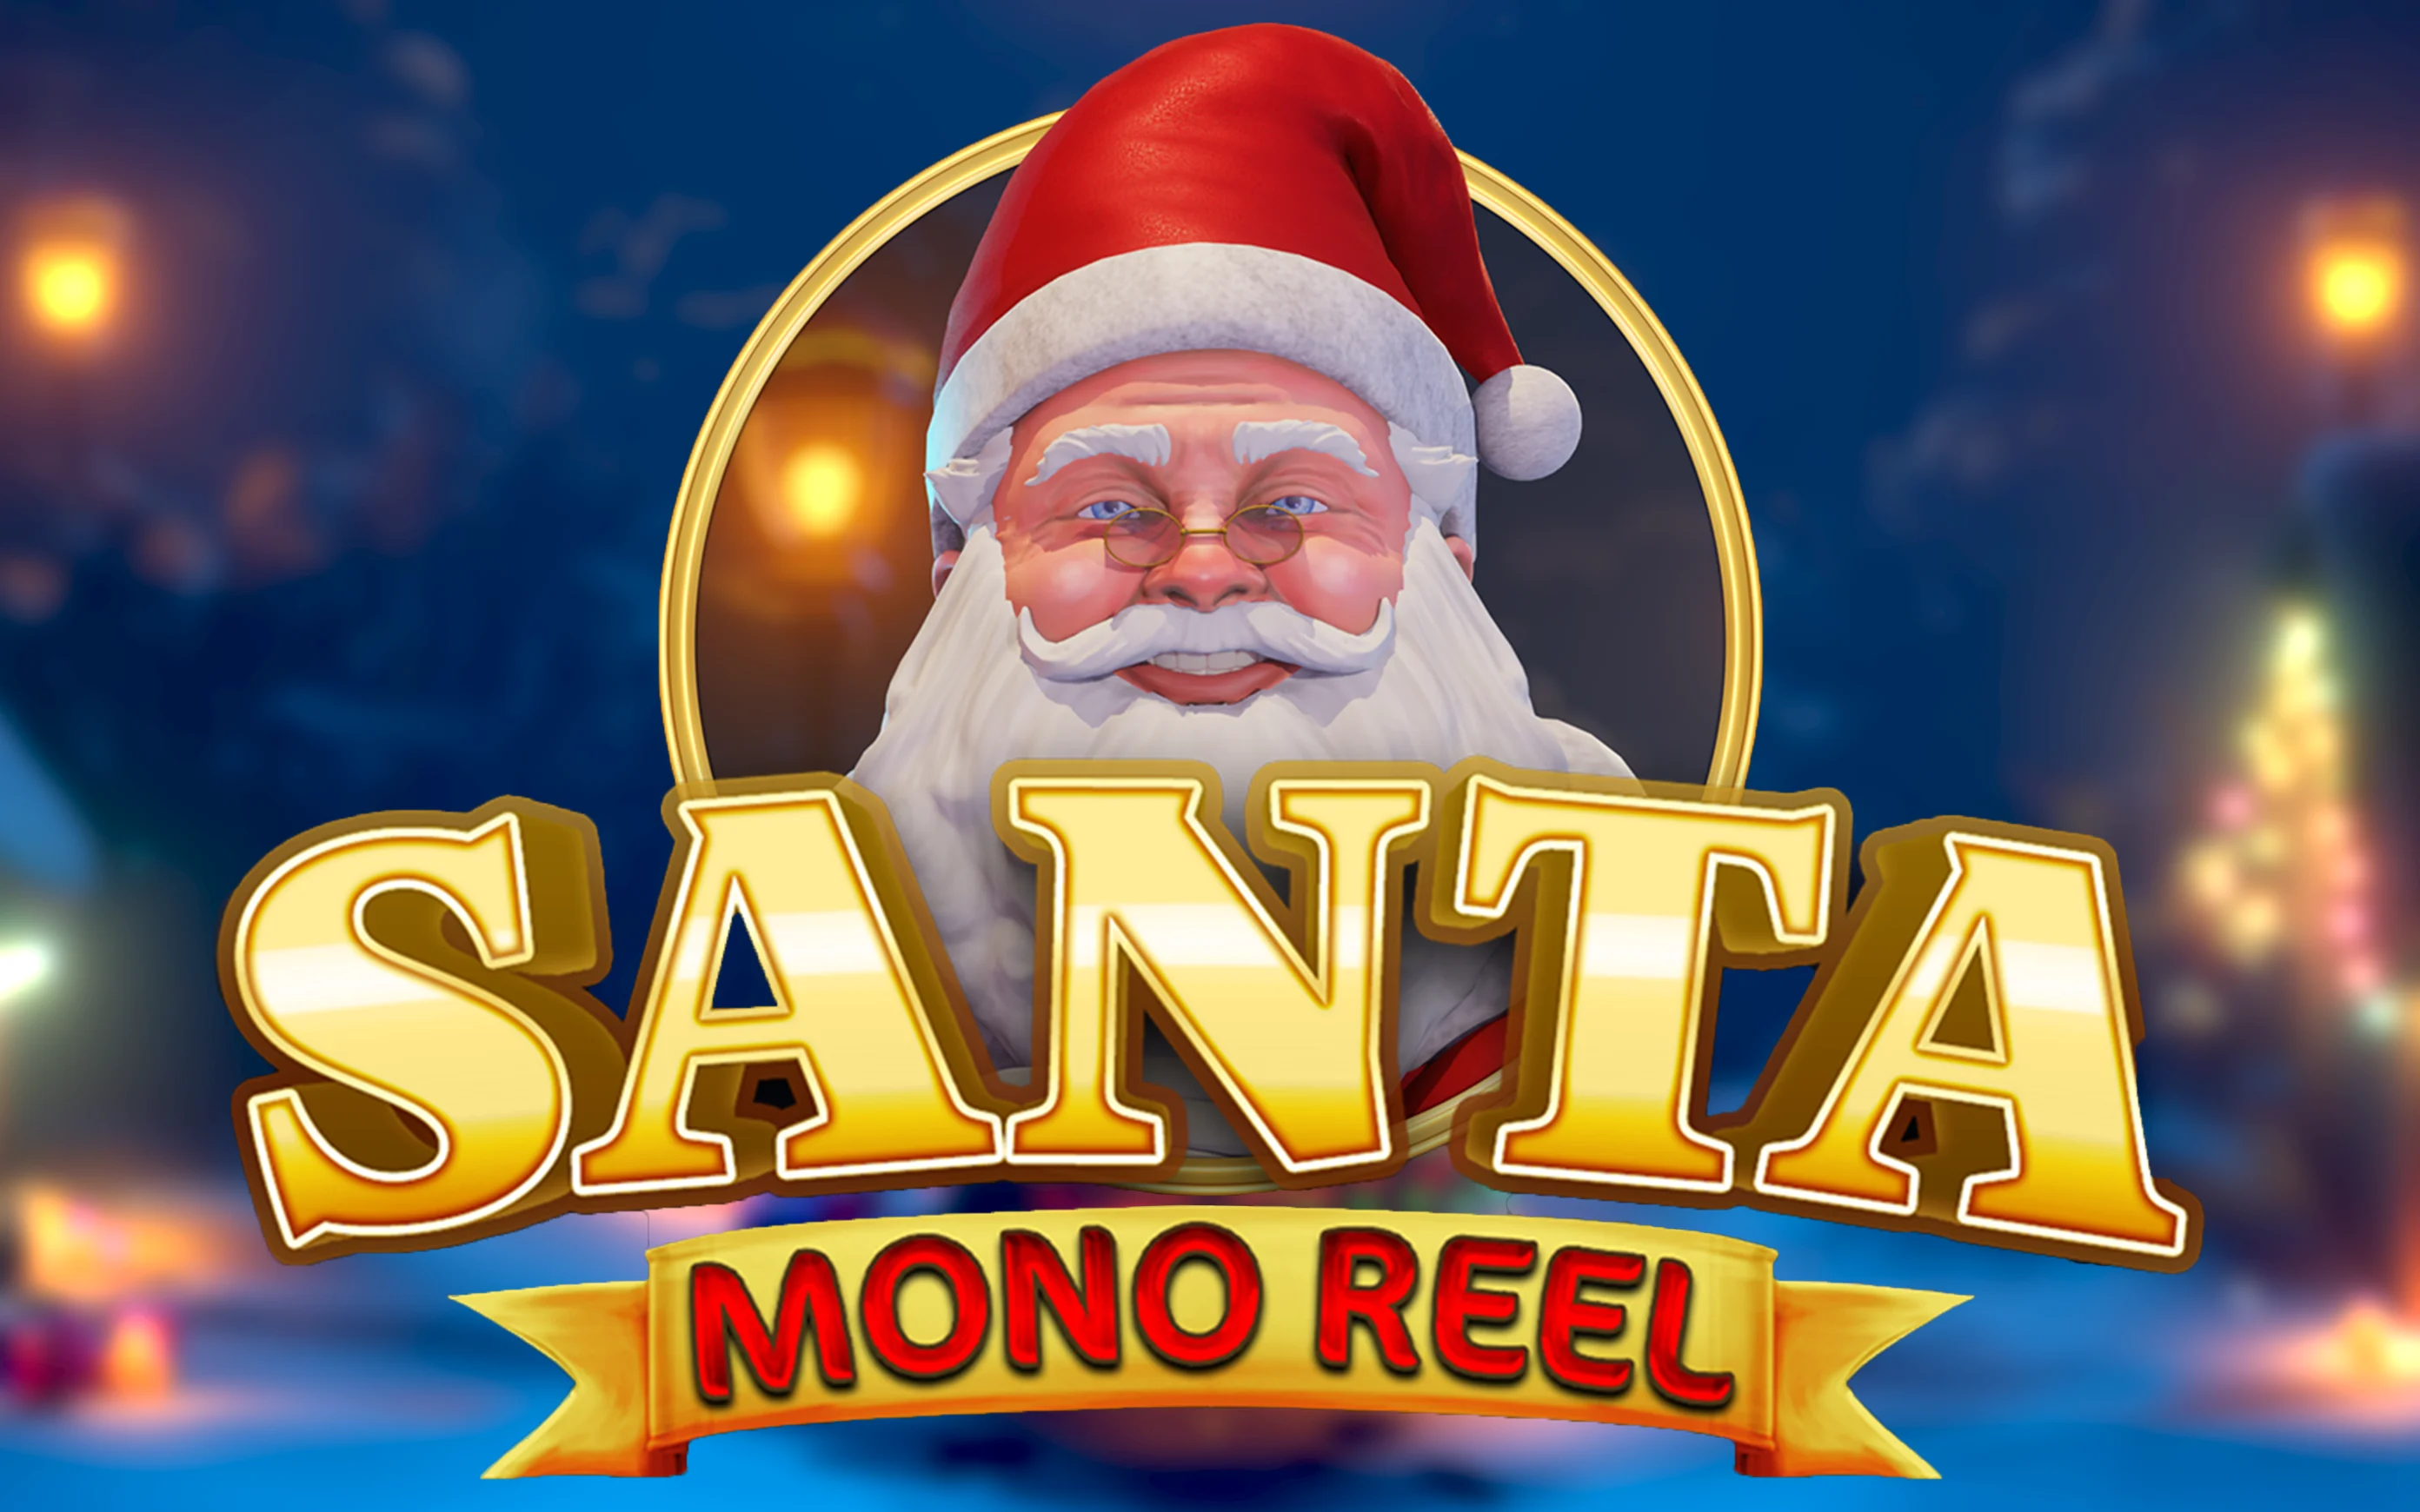 Играйте в Mono Reel Santa в онлайн-казино Starcasino.be